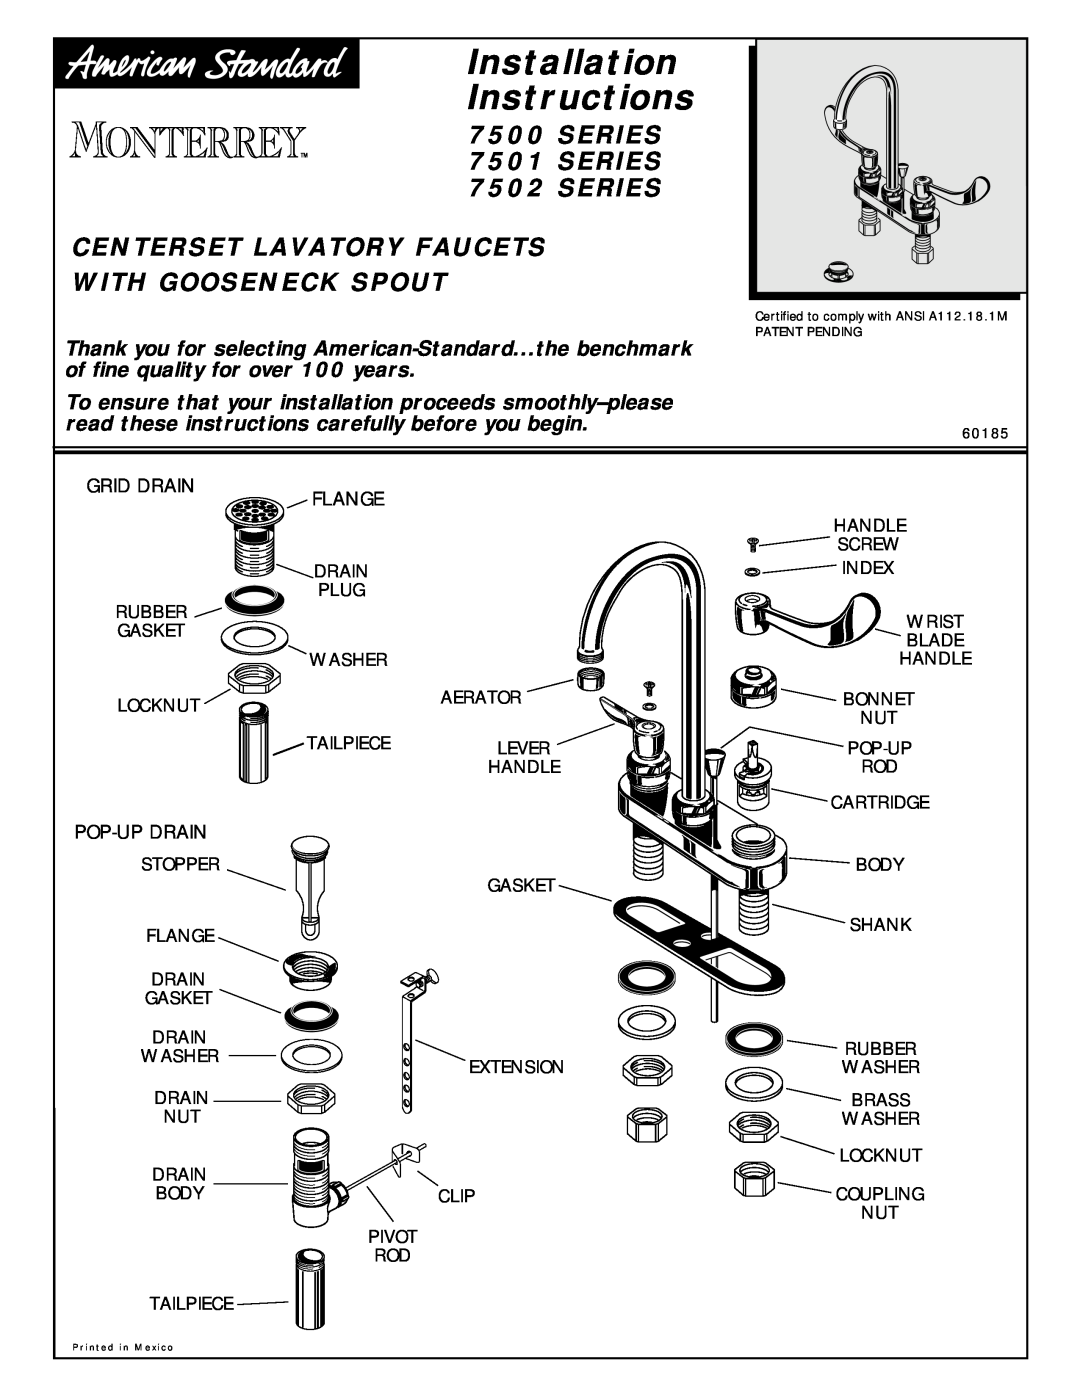 American Standard 7502 Series installation instructions Installation Instructions, SERIES 7501 SERIES 7502 SERIES 